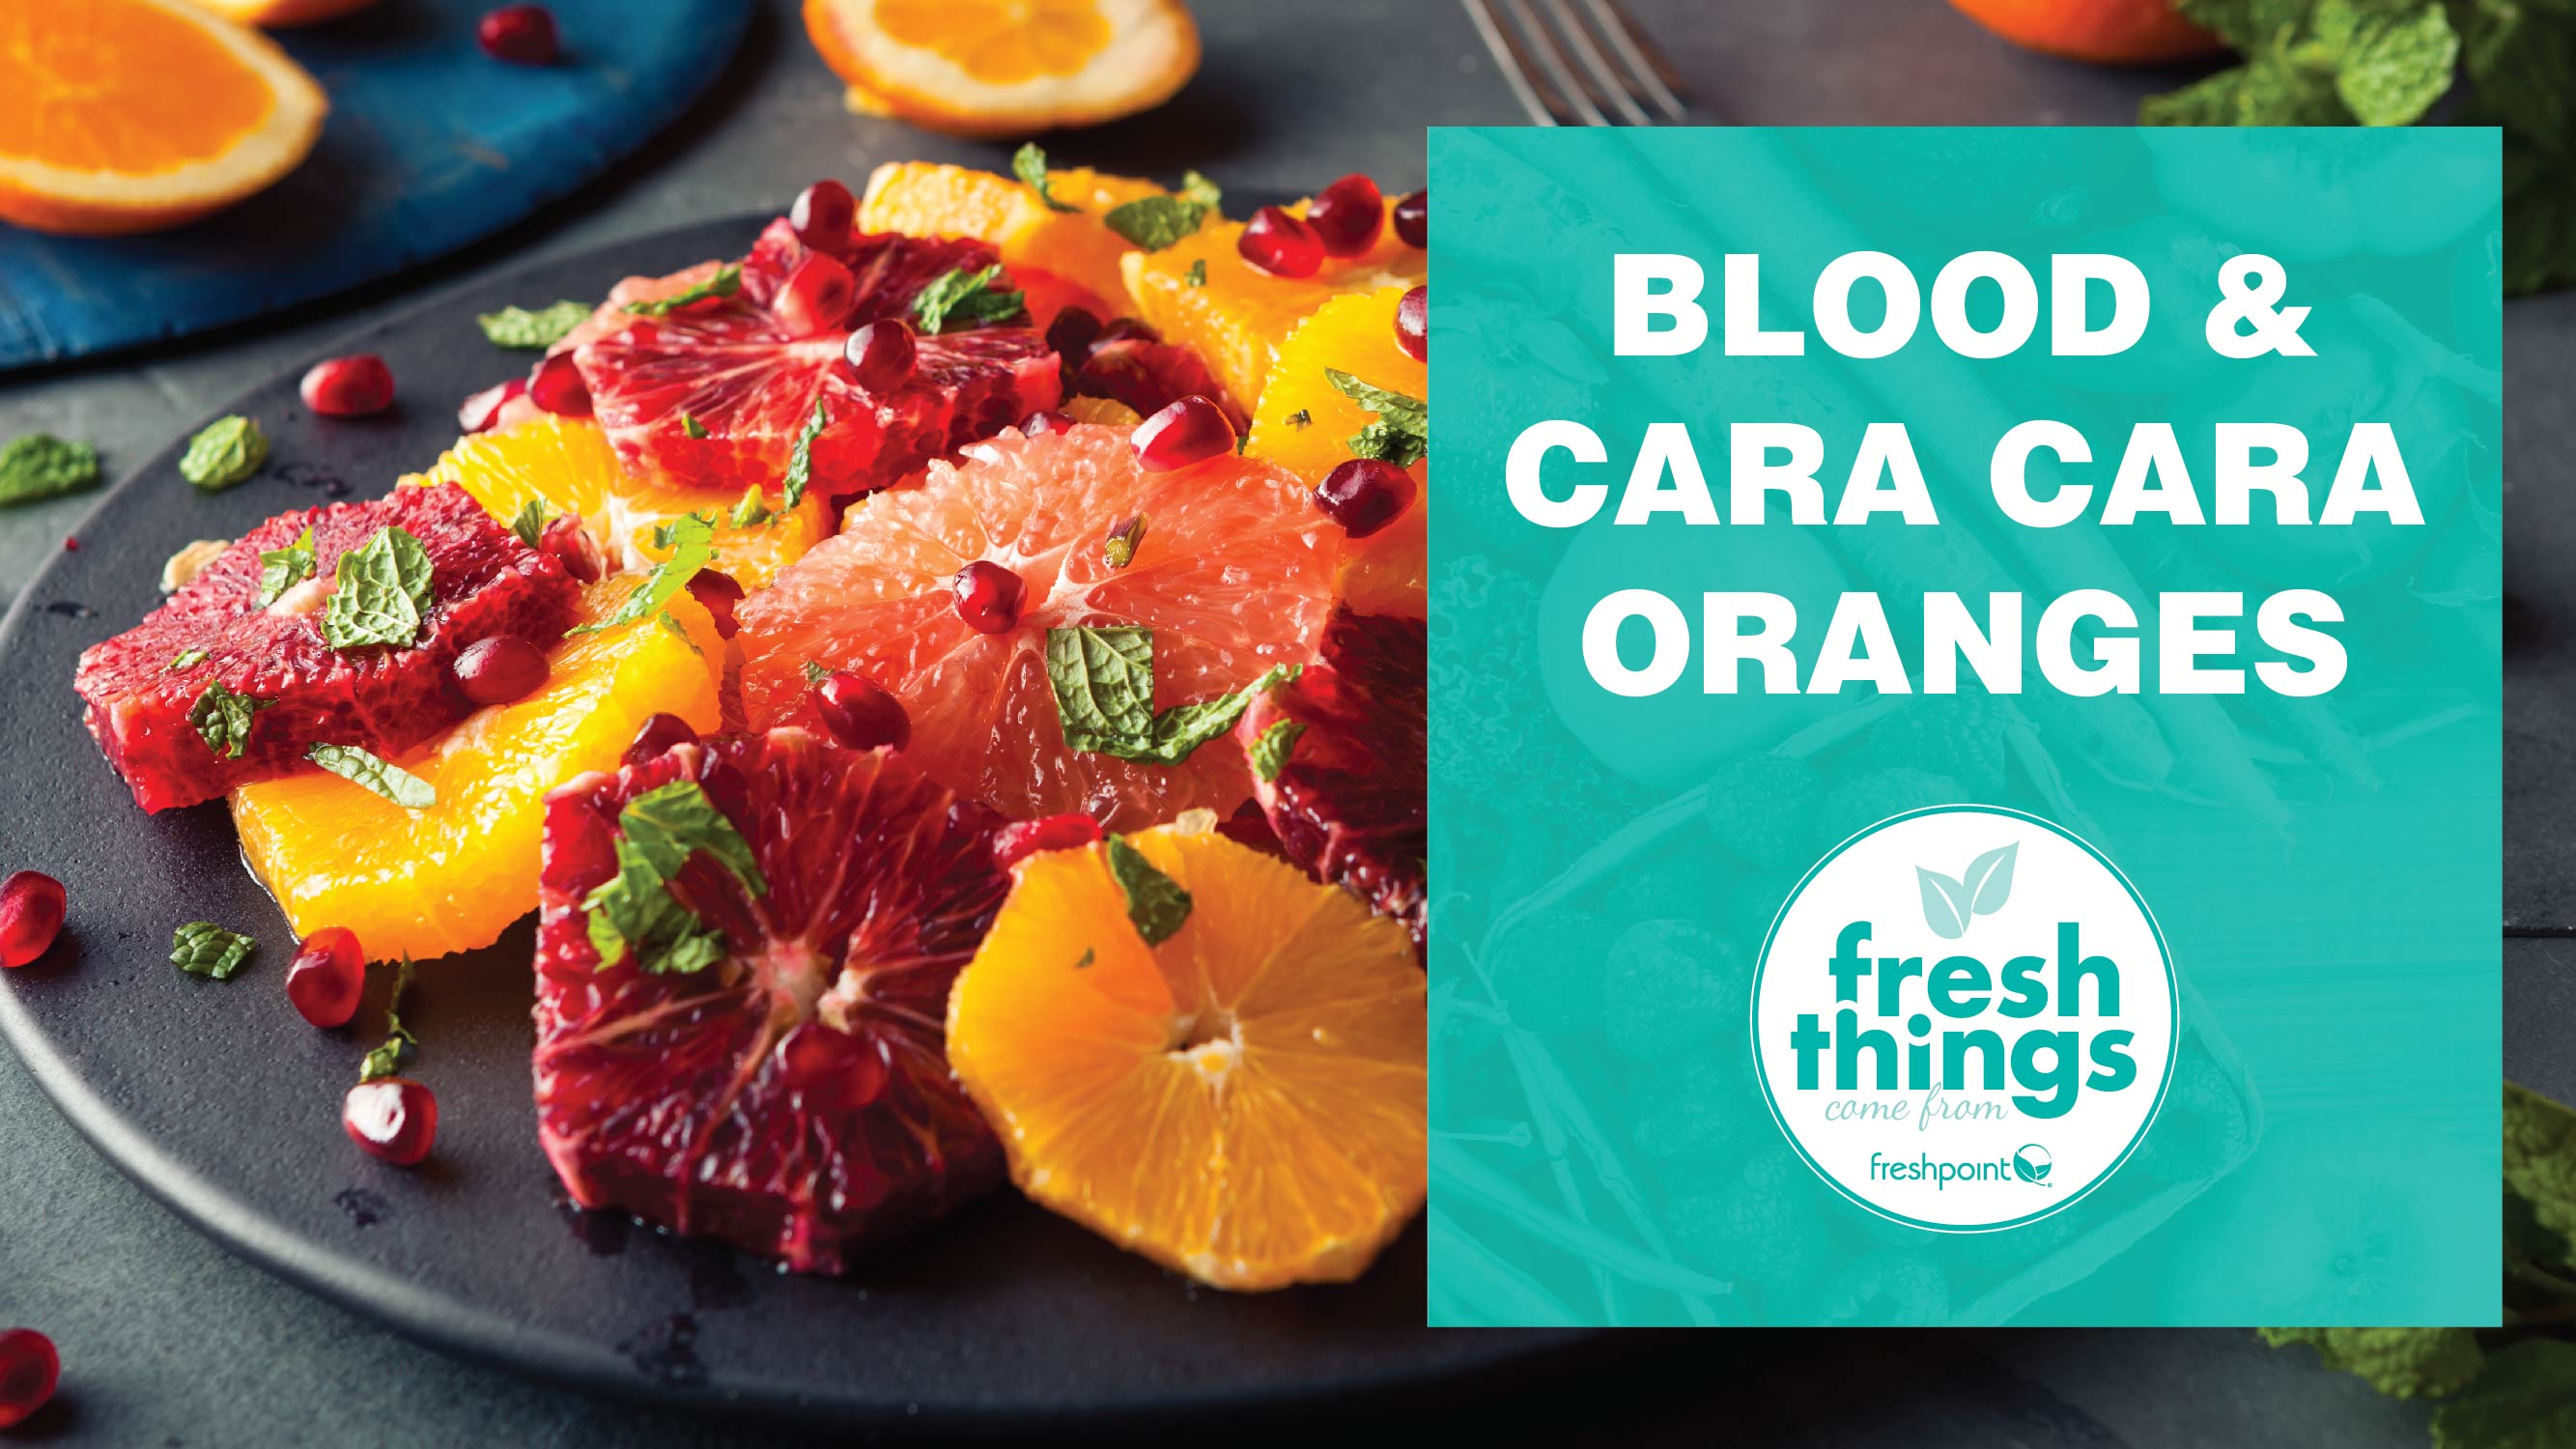 Seasonal Citrus Fruits, Blood Oranges, Tangerines & More